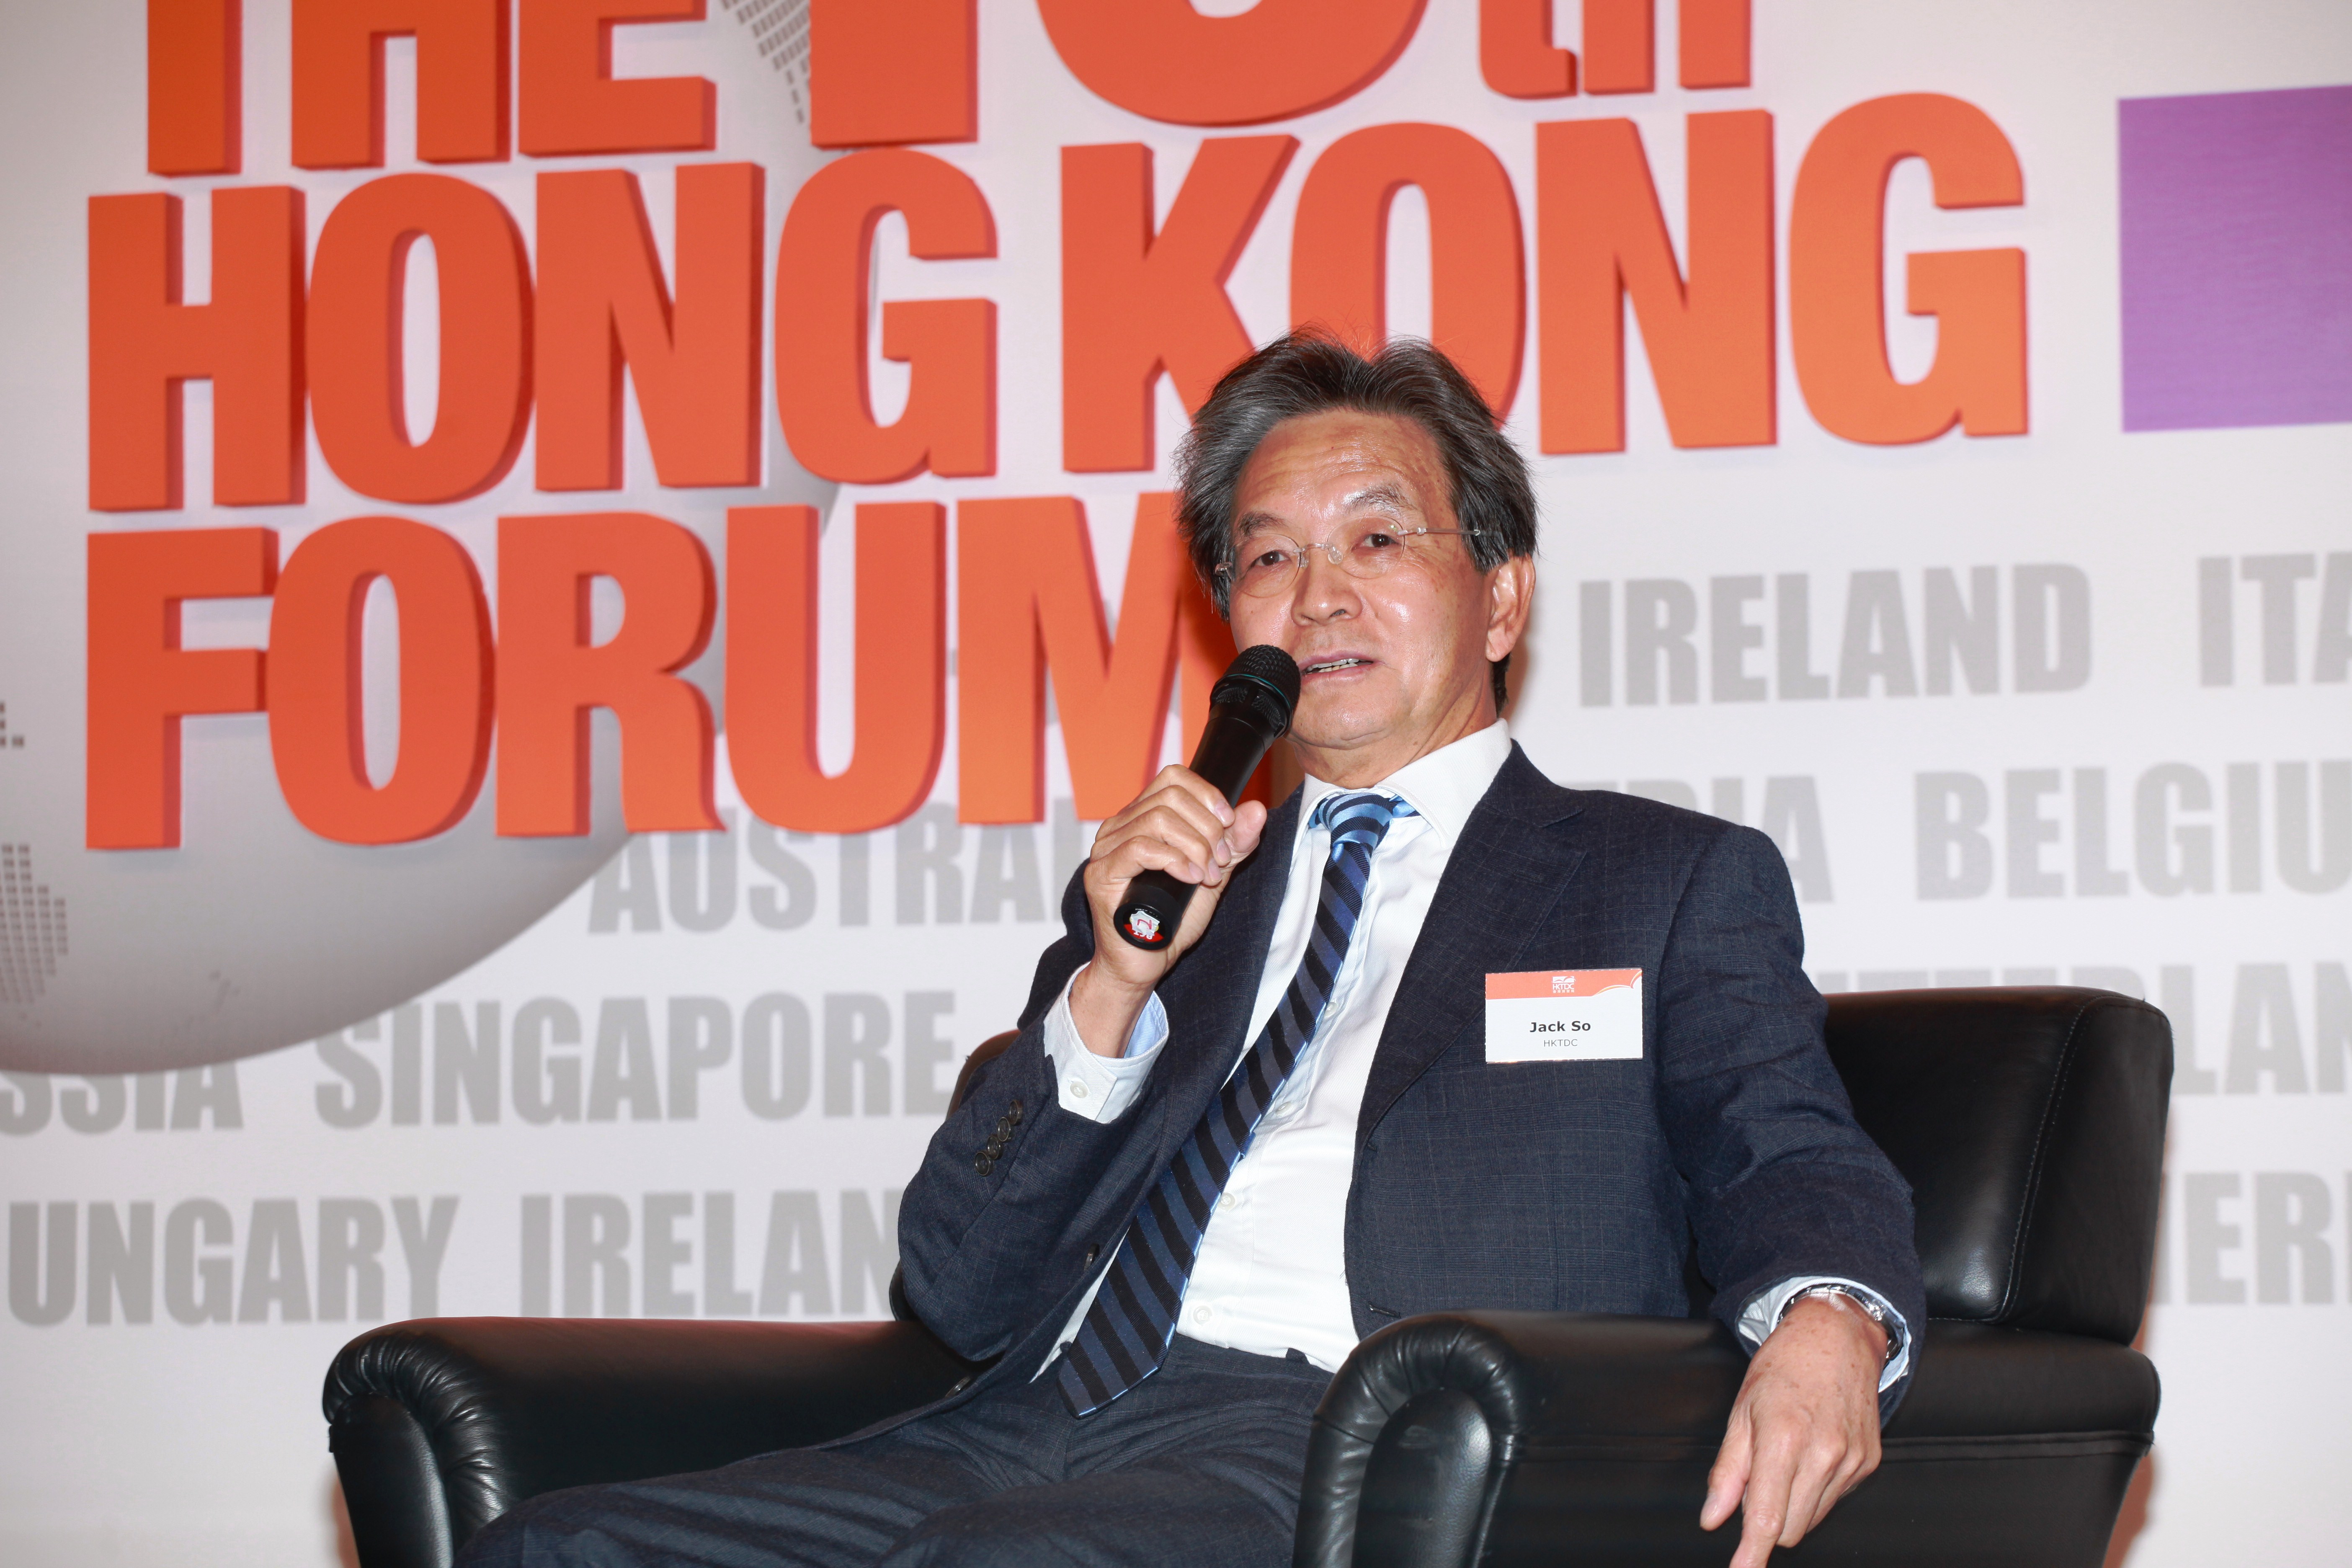 13th Hong Kong Forum Opens HKTDC Media Room